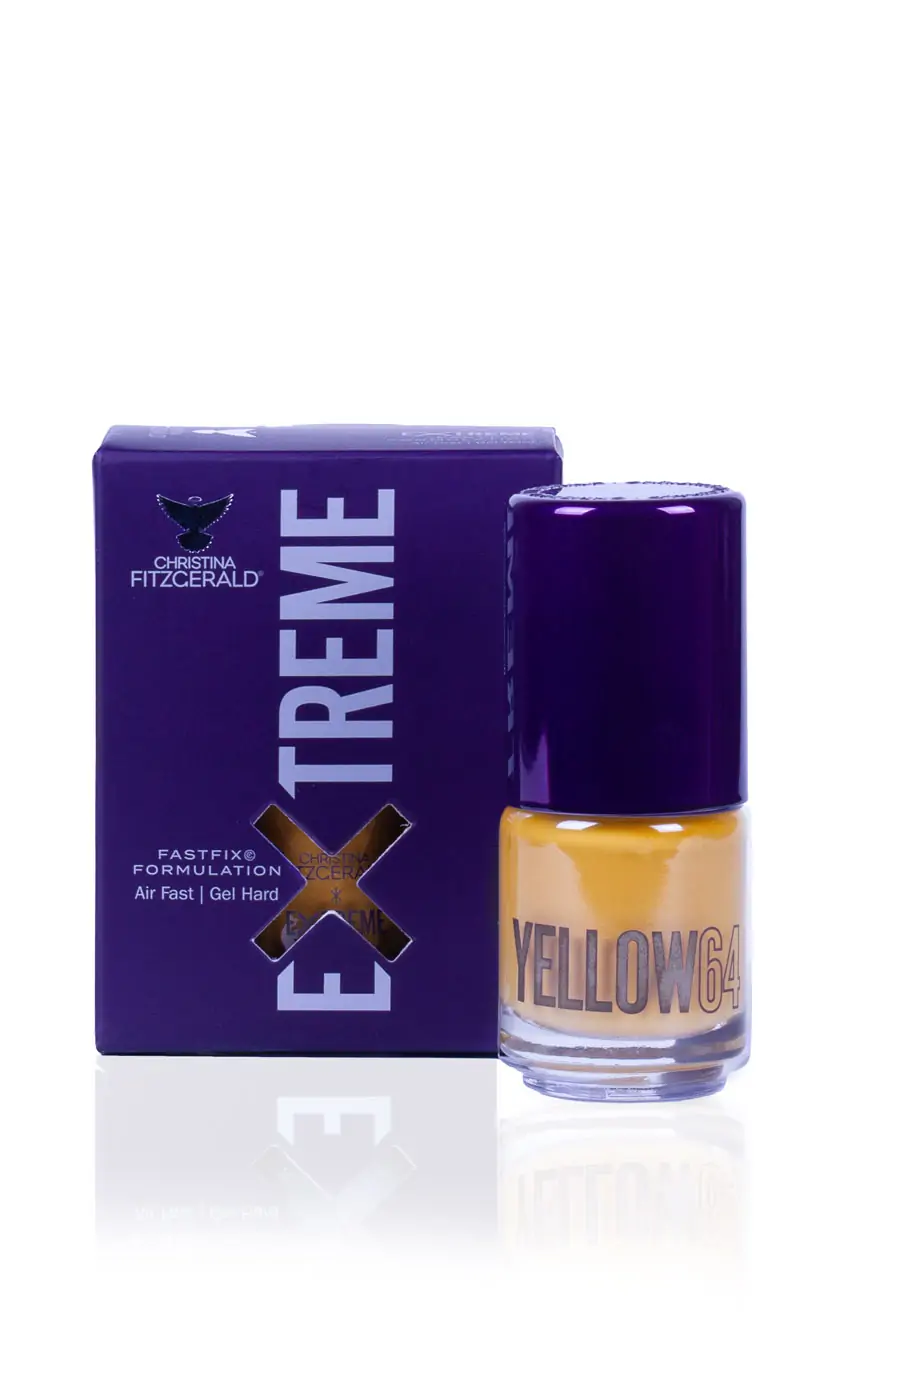 Лак для ногтей Extreme - Yellow 64 в интернет-магазине Authentica.love